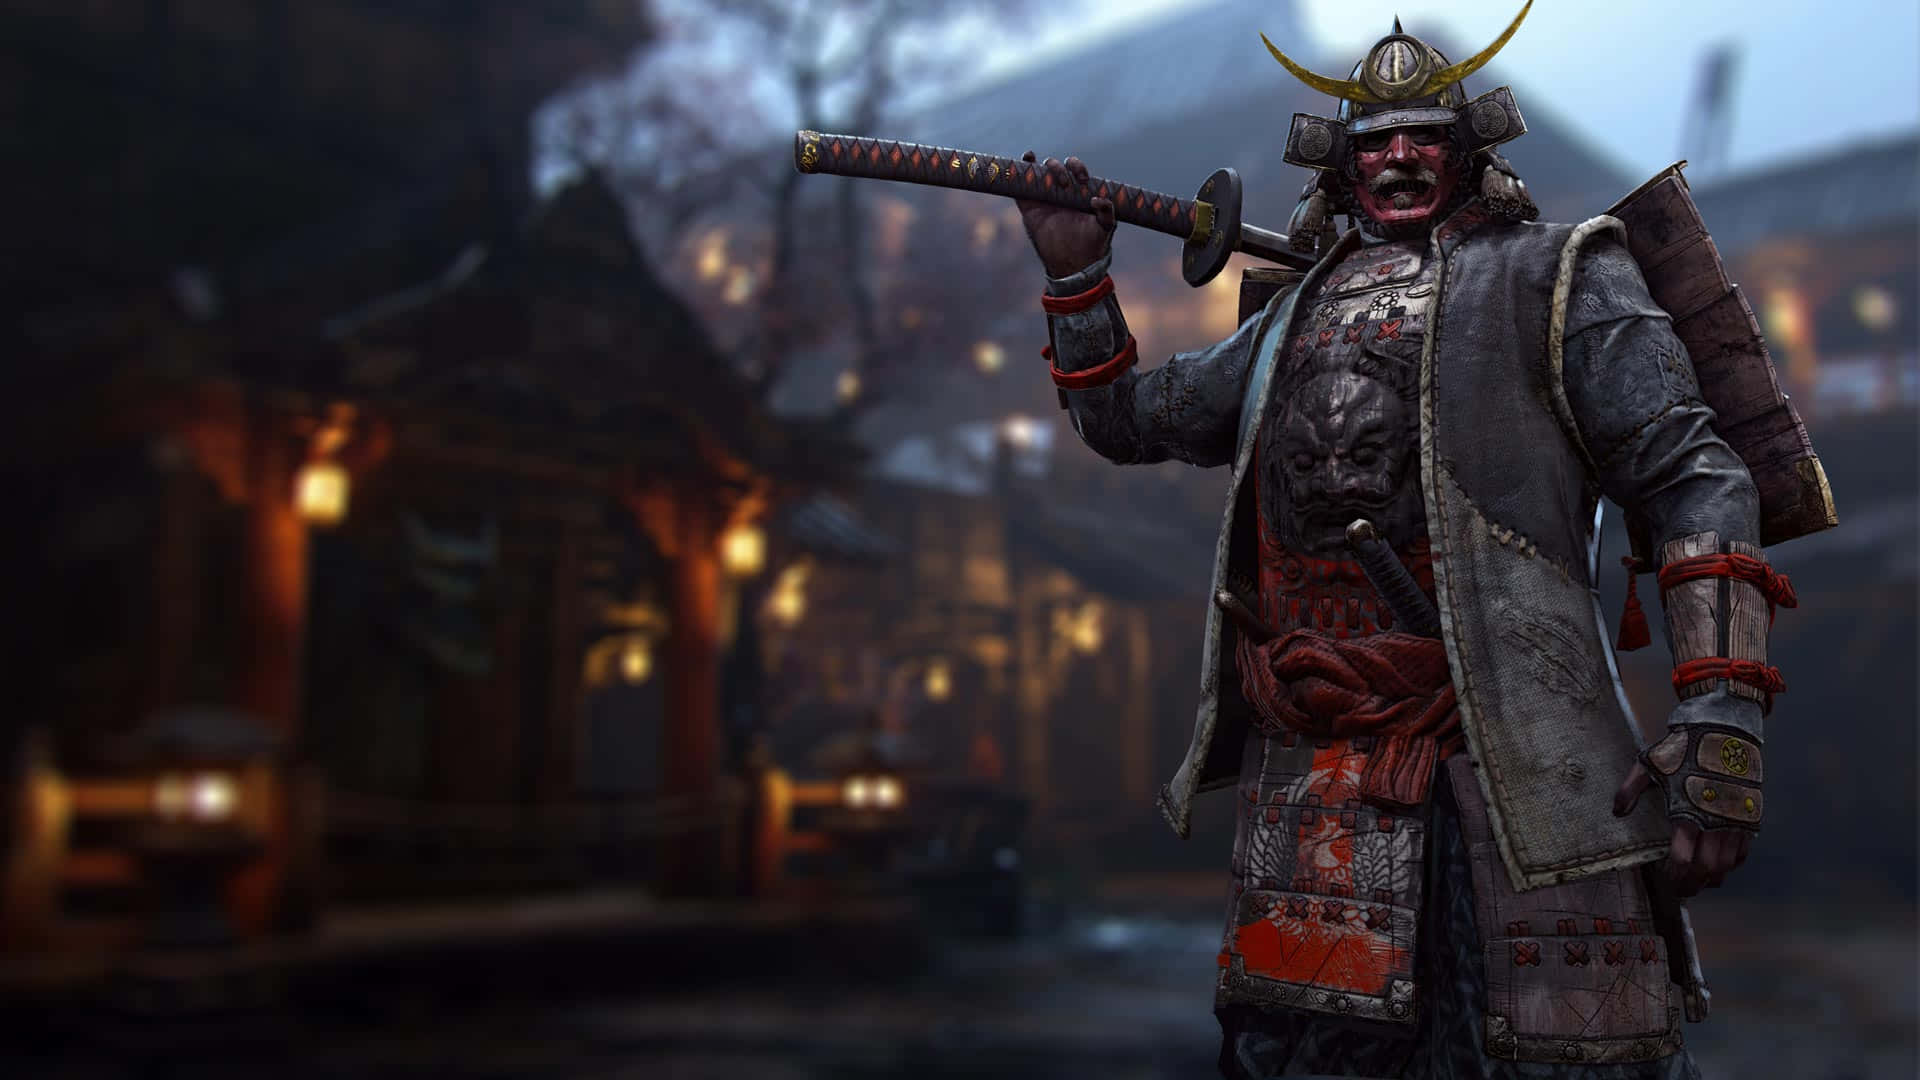 1080p For Honor Background Masked Samurai Swordsman